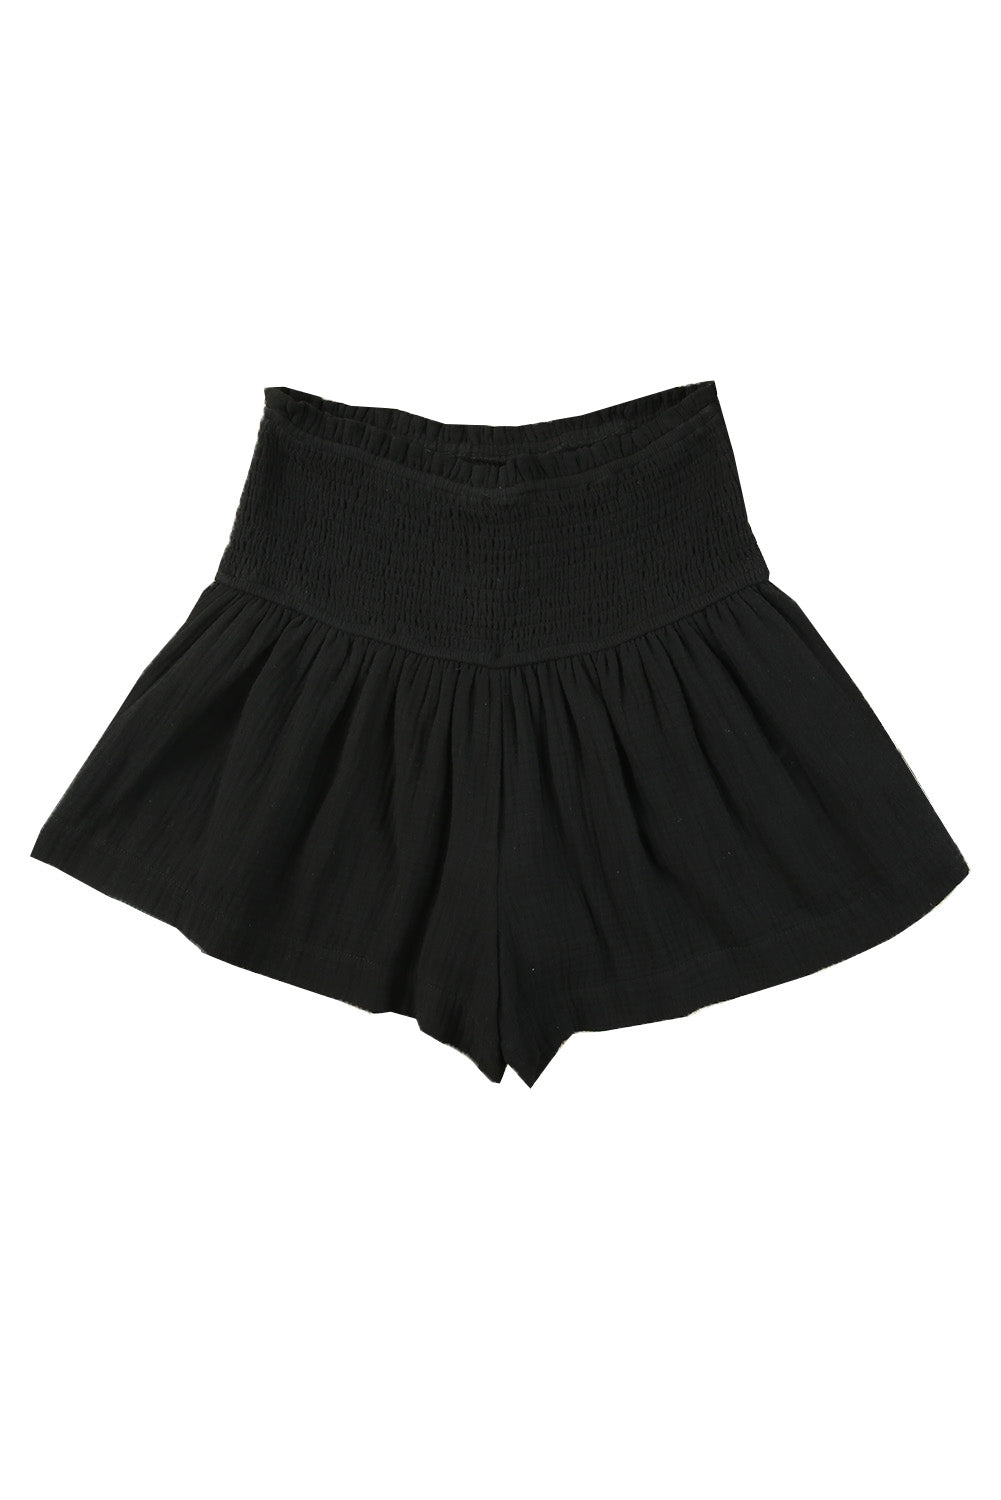 Black Smocked High Waist Ruffle Shorts